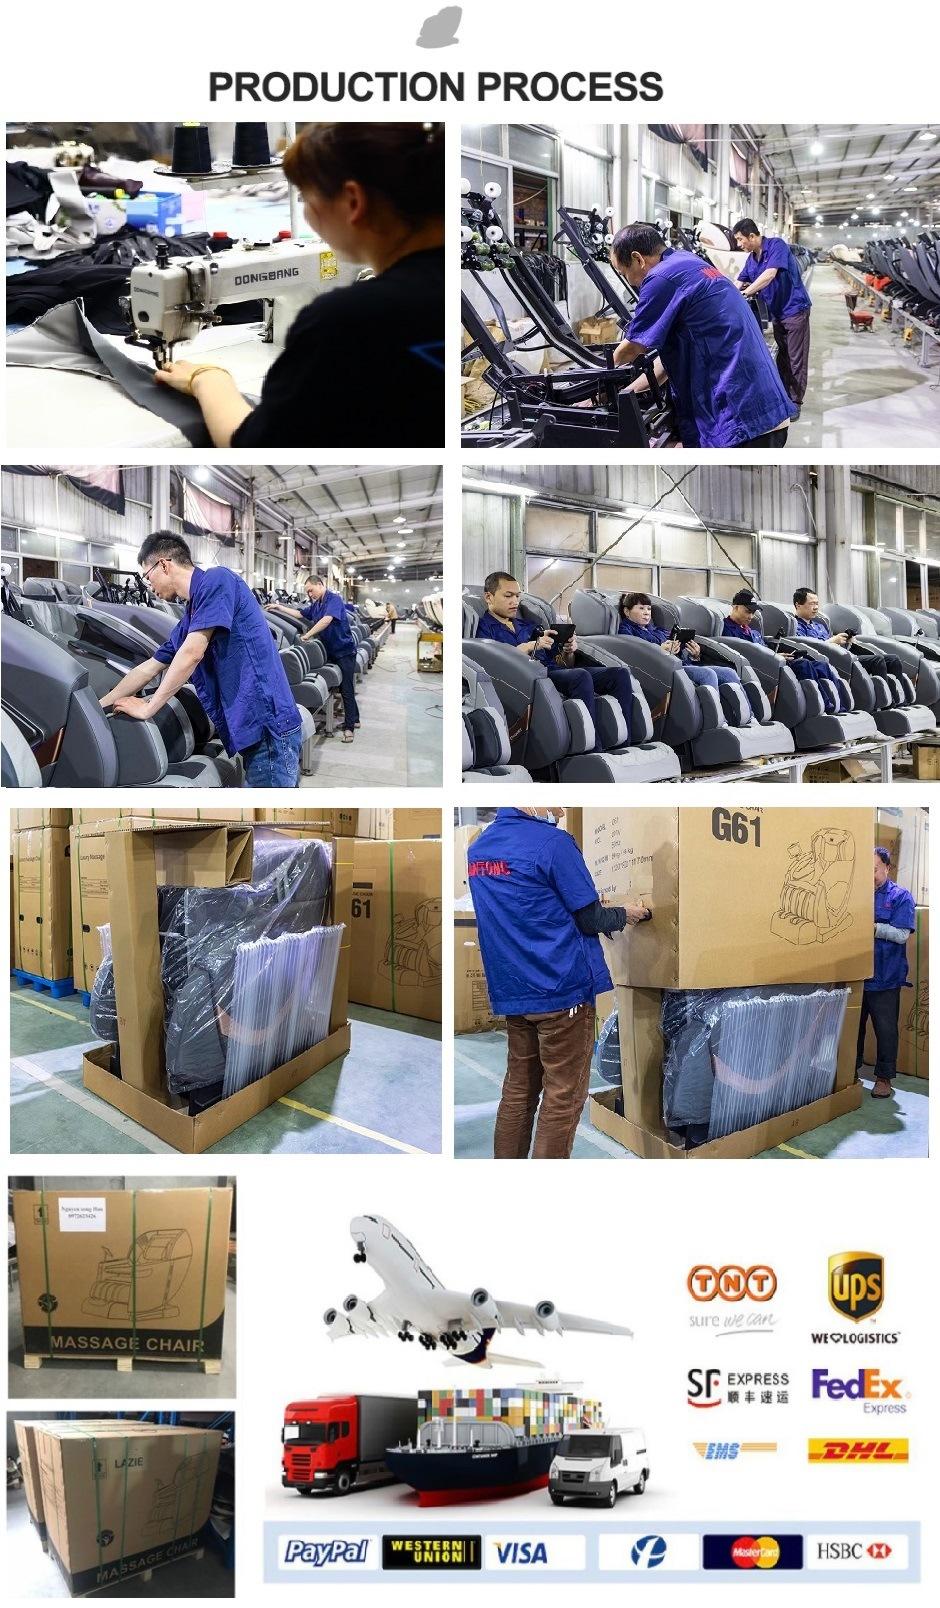 2021 New 4D Shiatsu Airbag Calf Foot Full Body Cheap Massage Chair Price